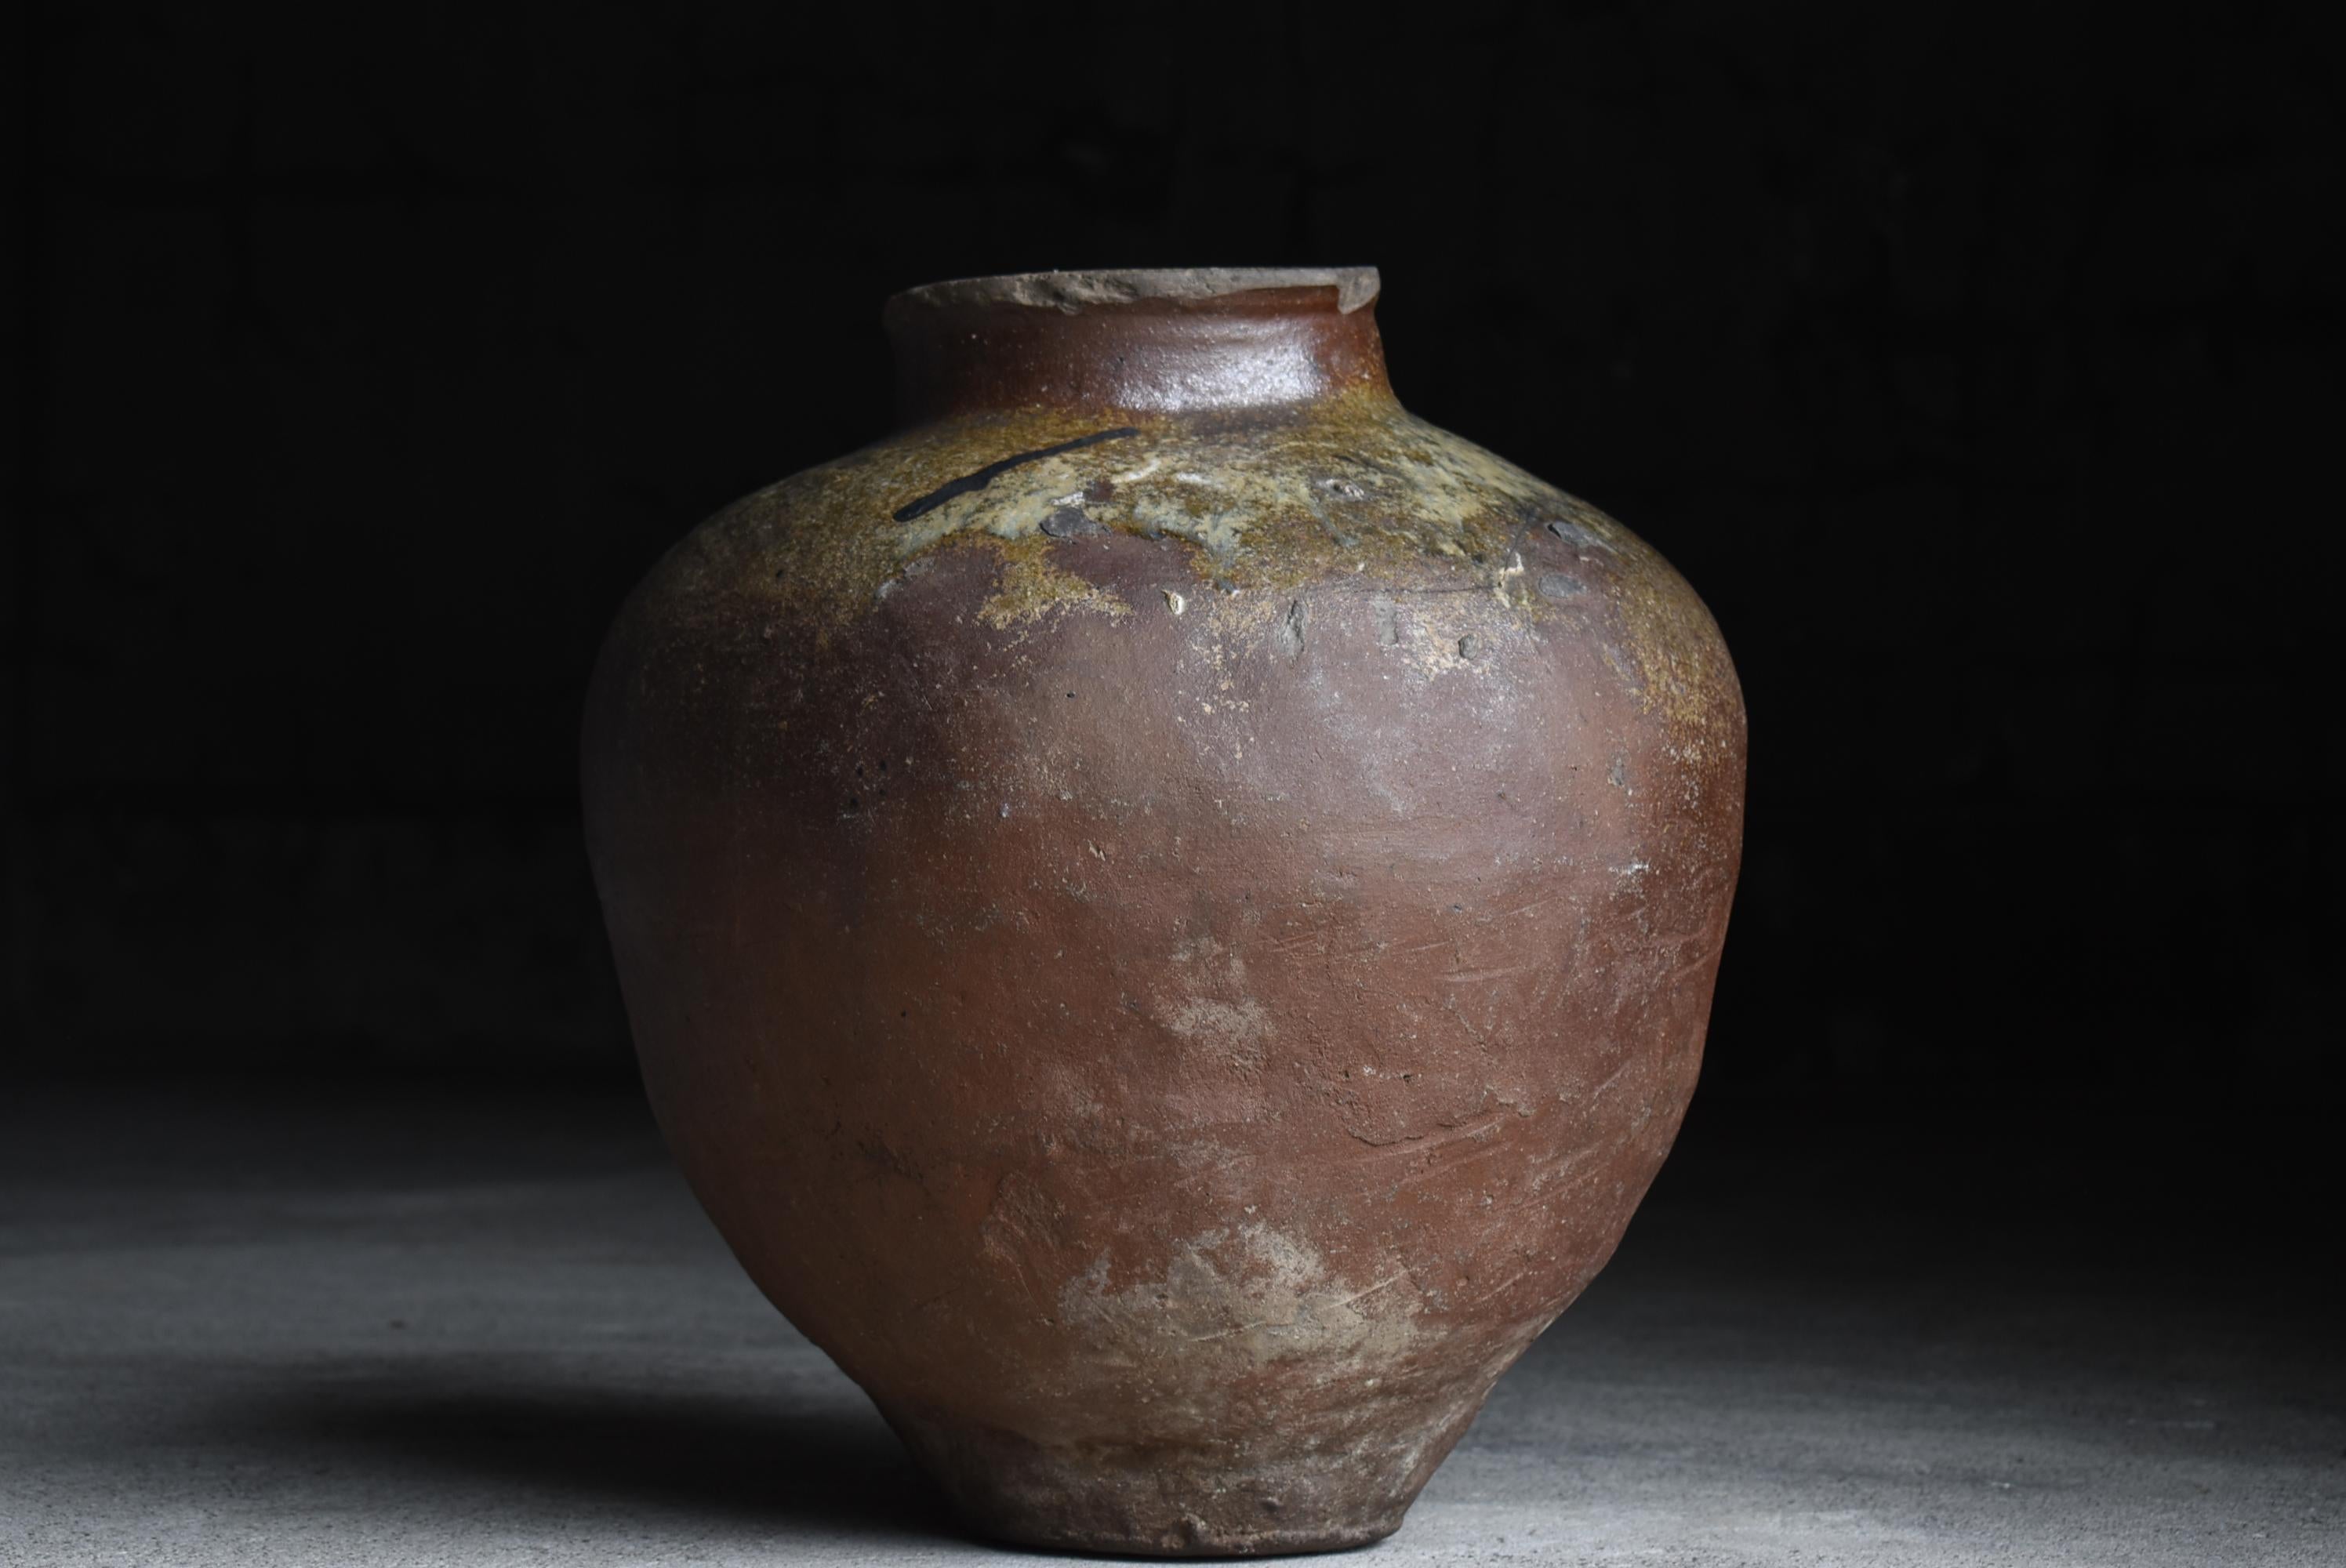 Edo Japanese Old Pottery 1700s-1800s/Antique Flower Vase Vessel Jar Tsubo Wabisabi